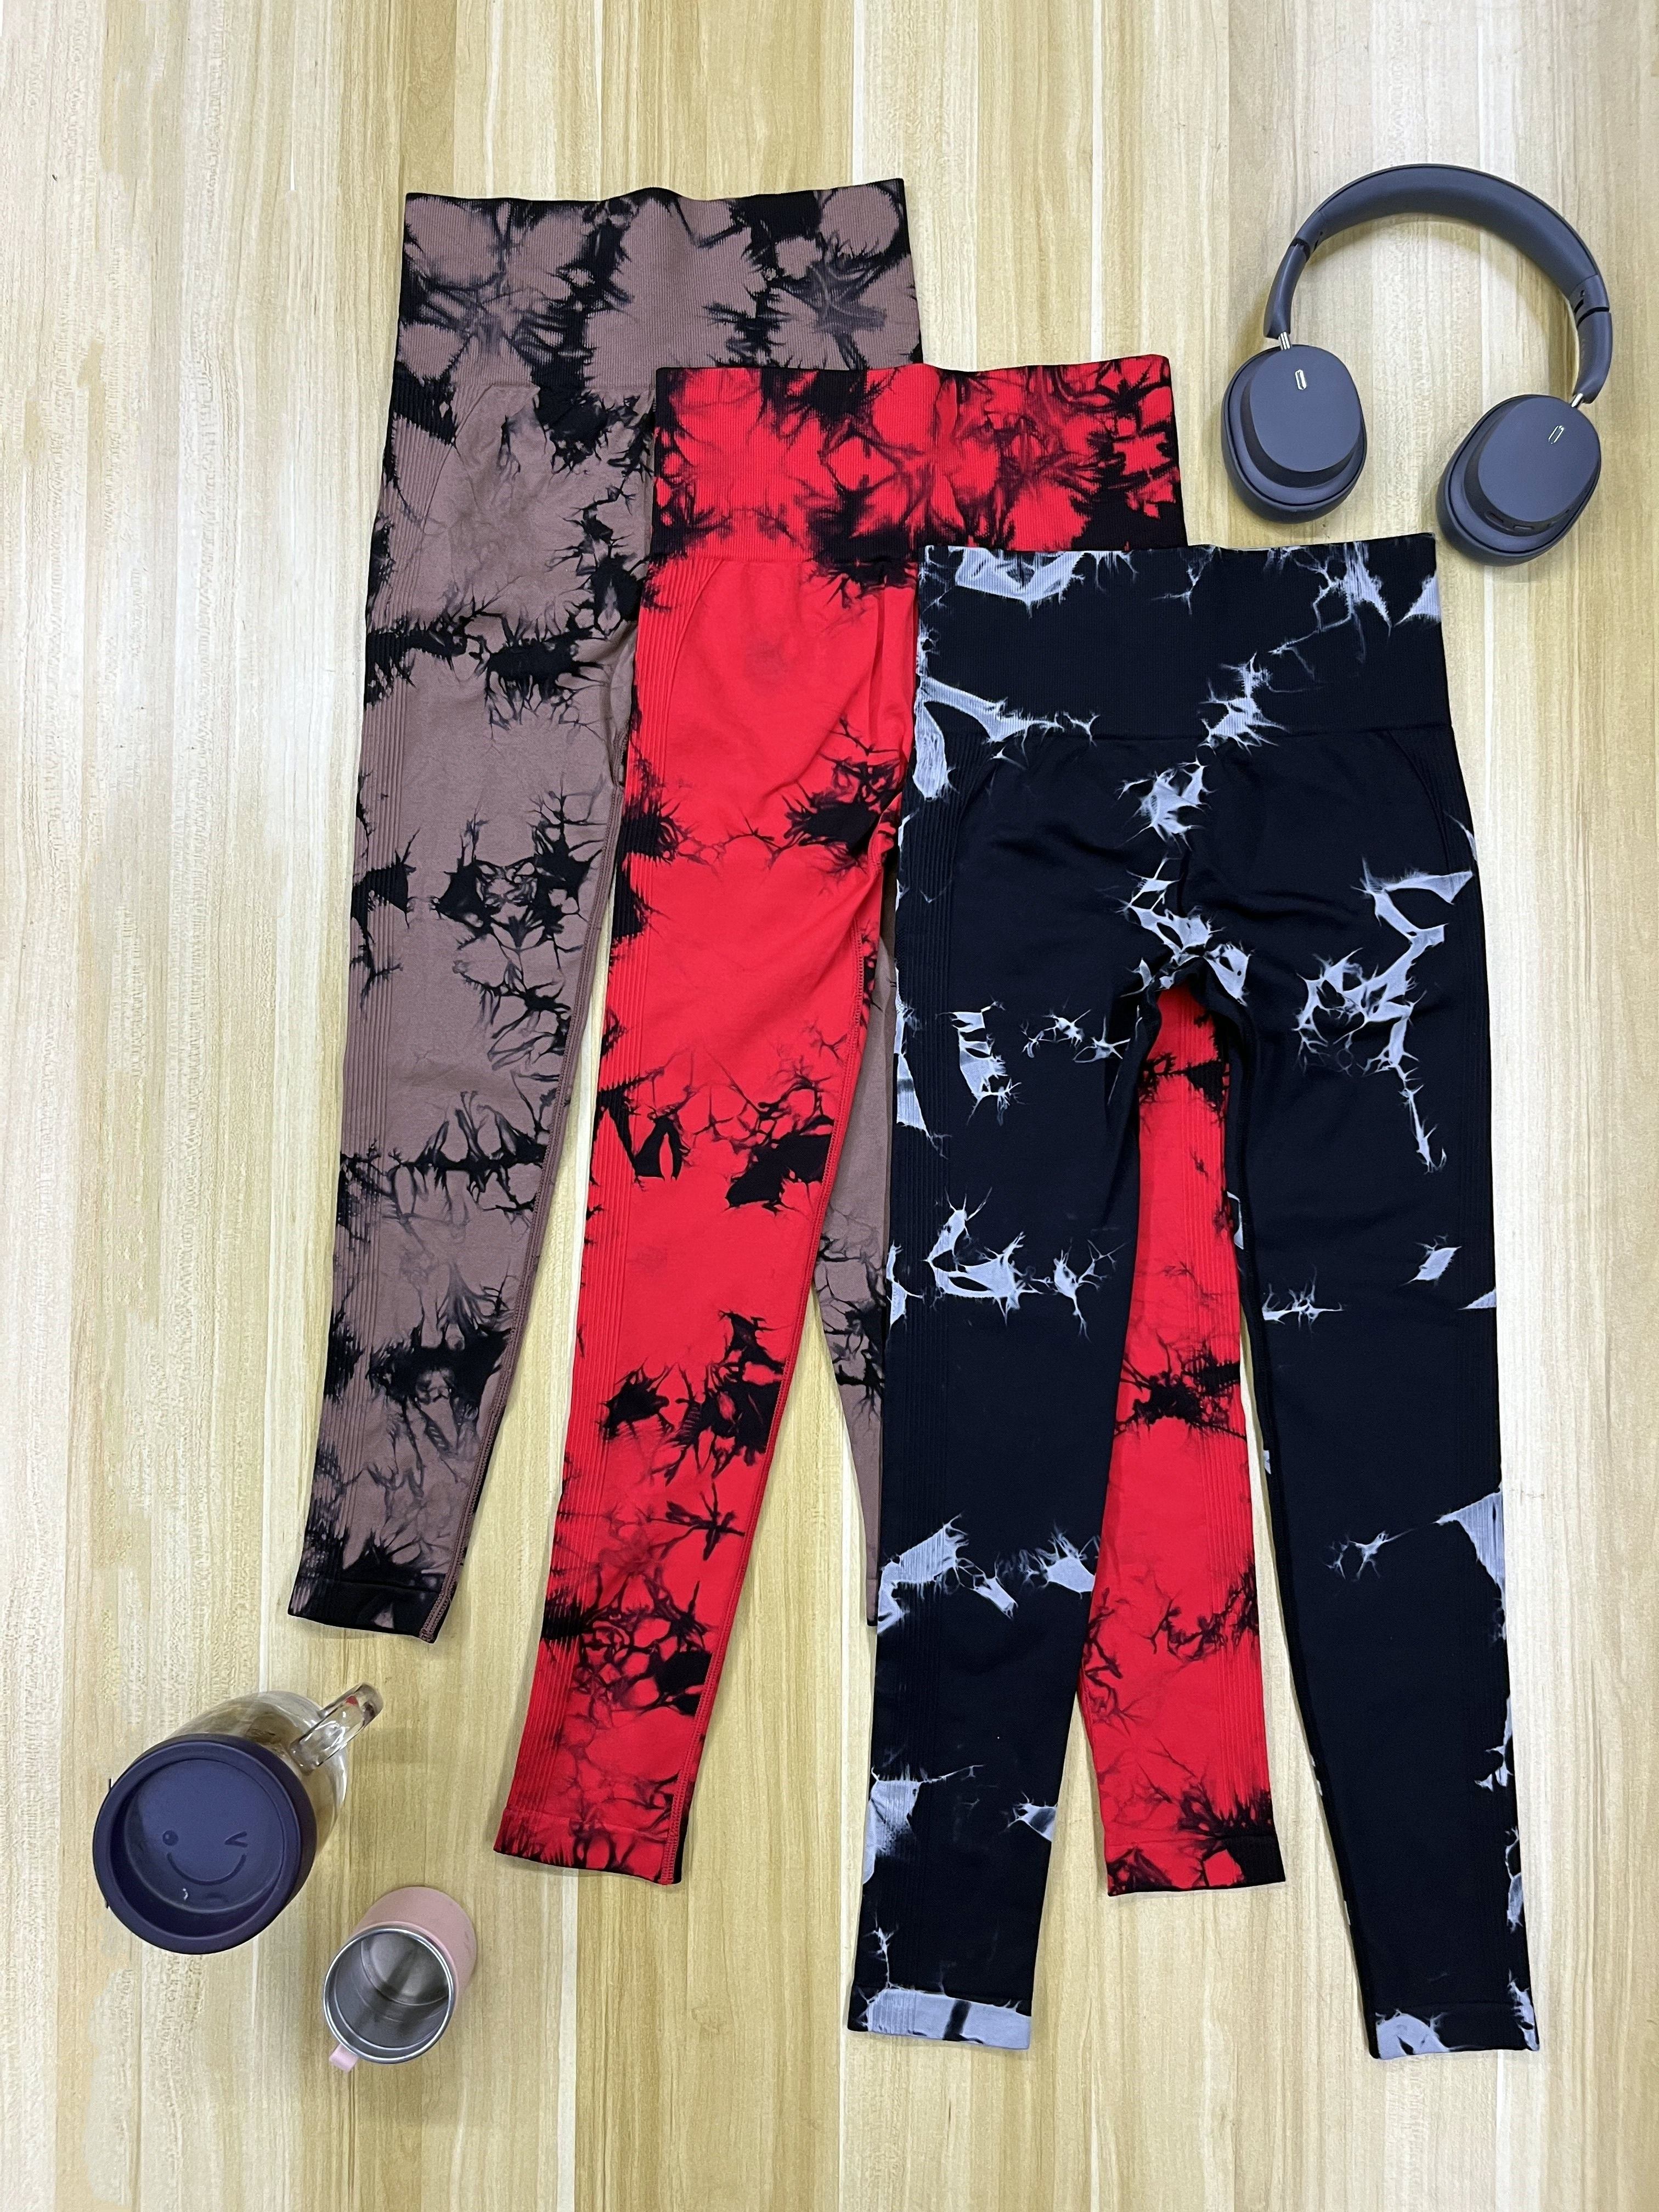 Leggings with Pockets for Women, Fashion Tie-Dye Printed Yoga High